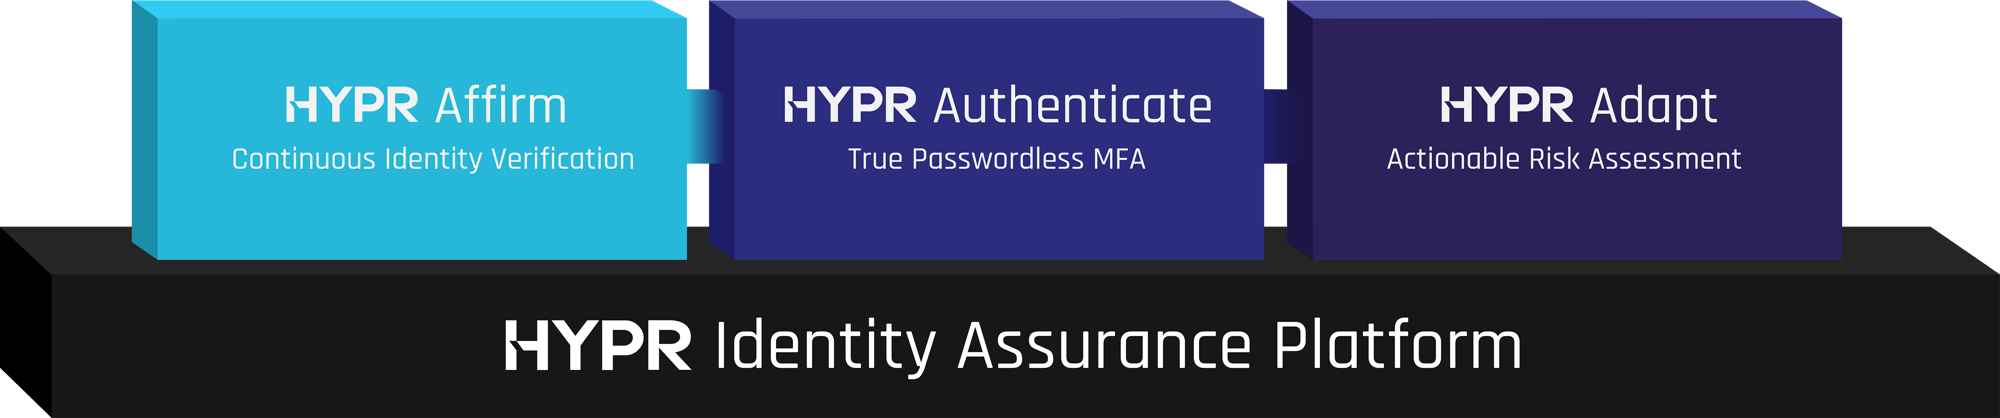 Identity-Assurance-platform-blocks-231411